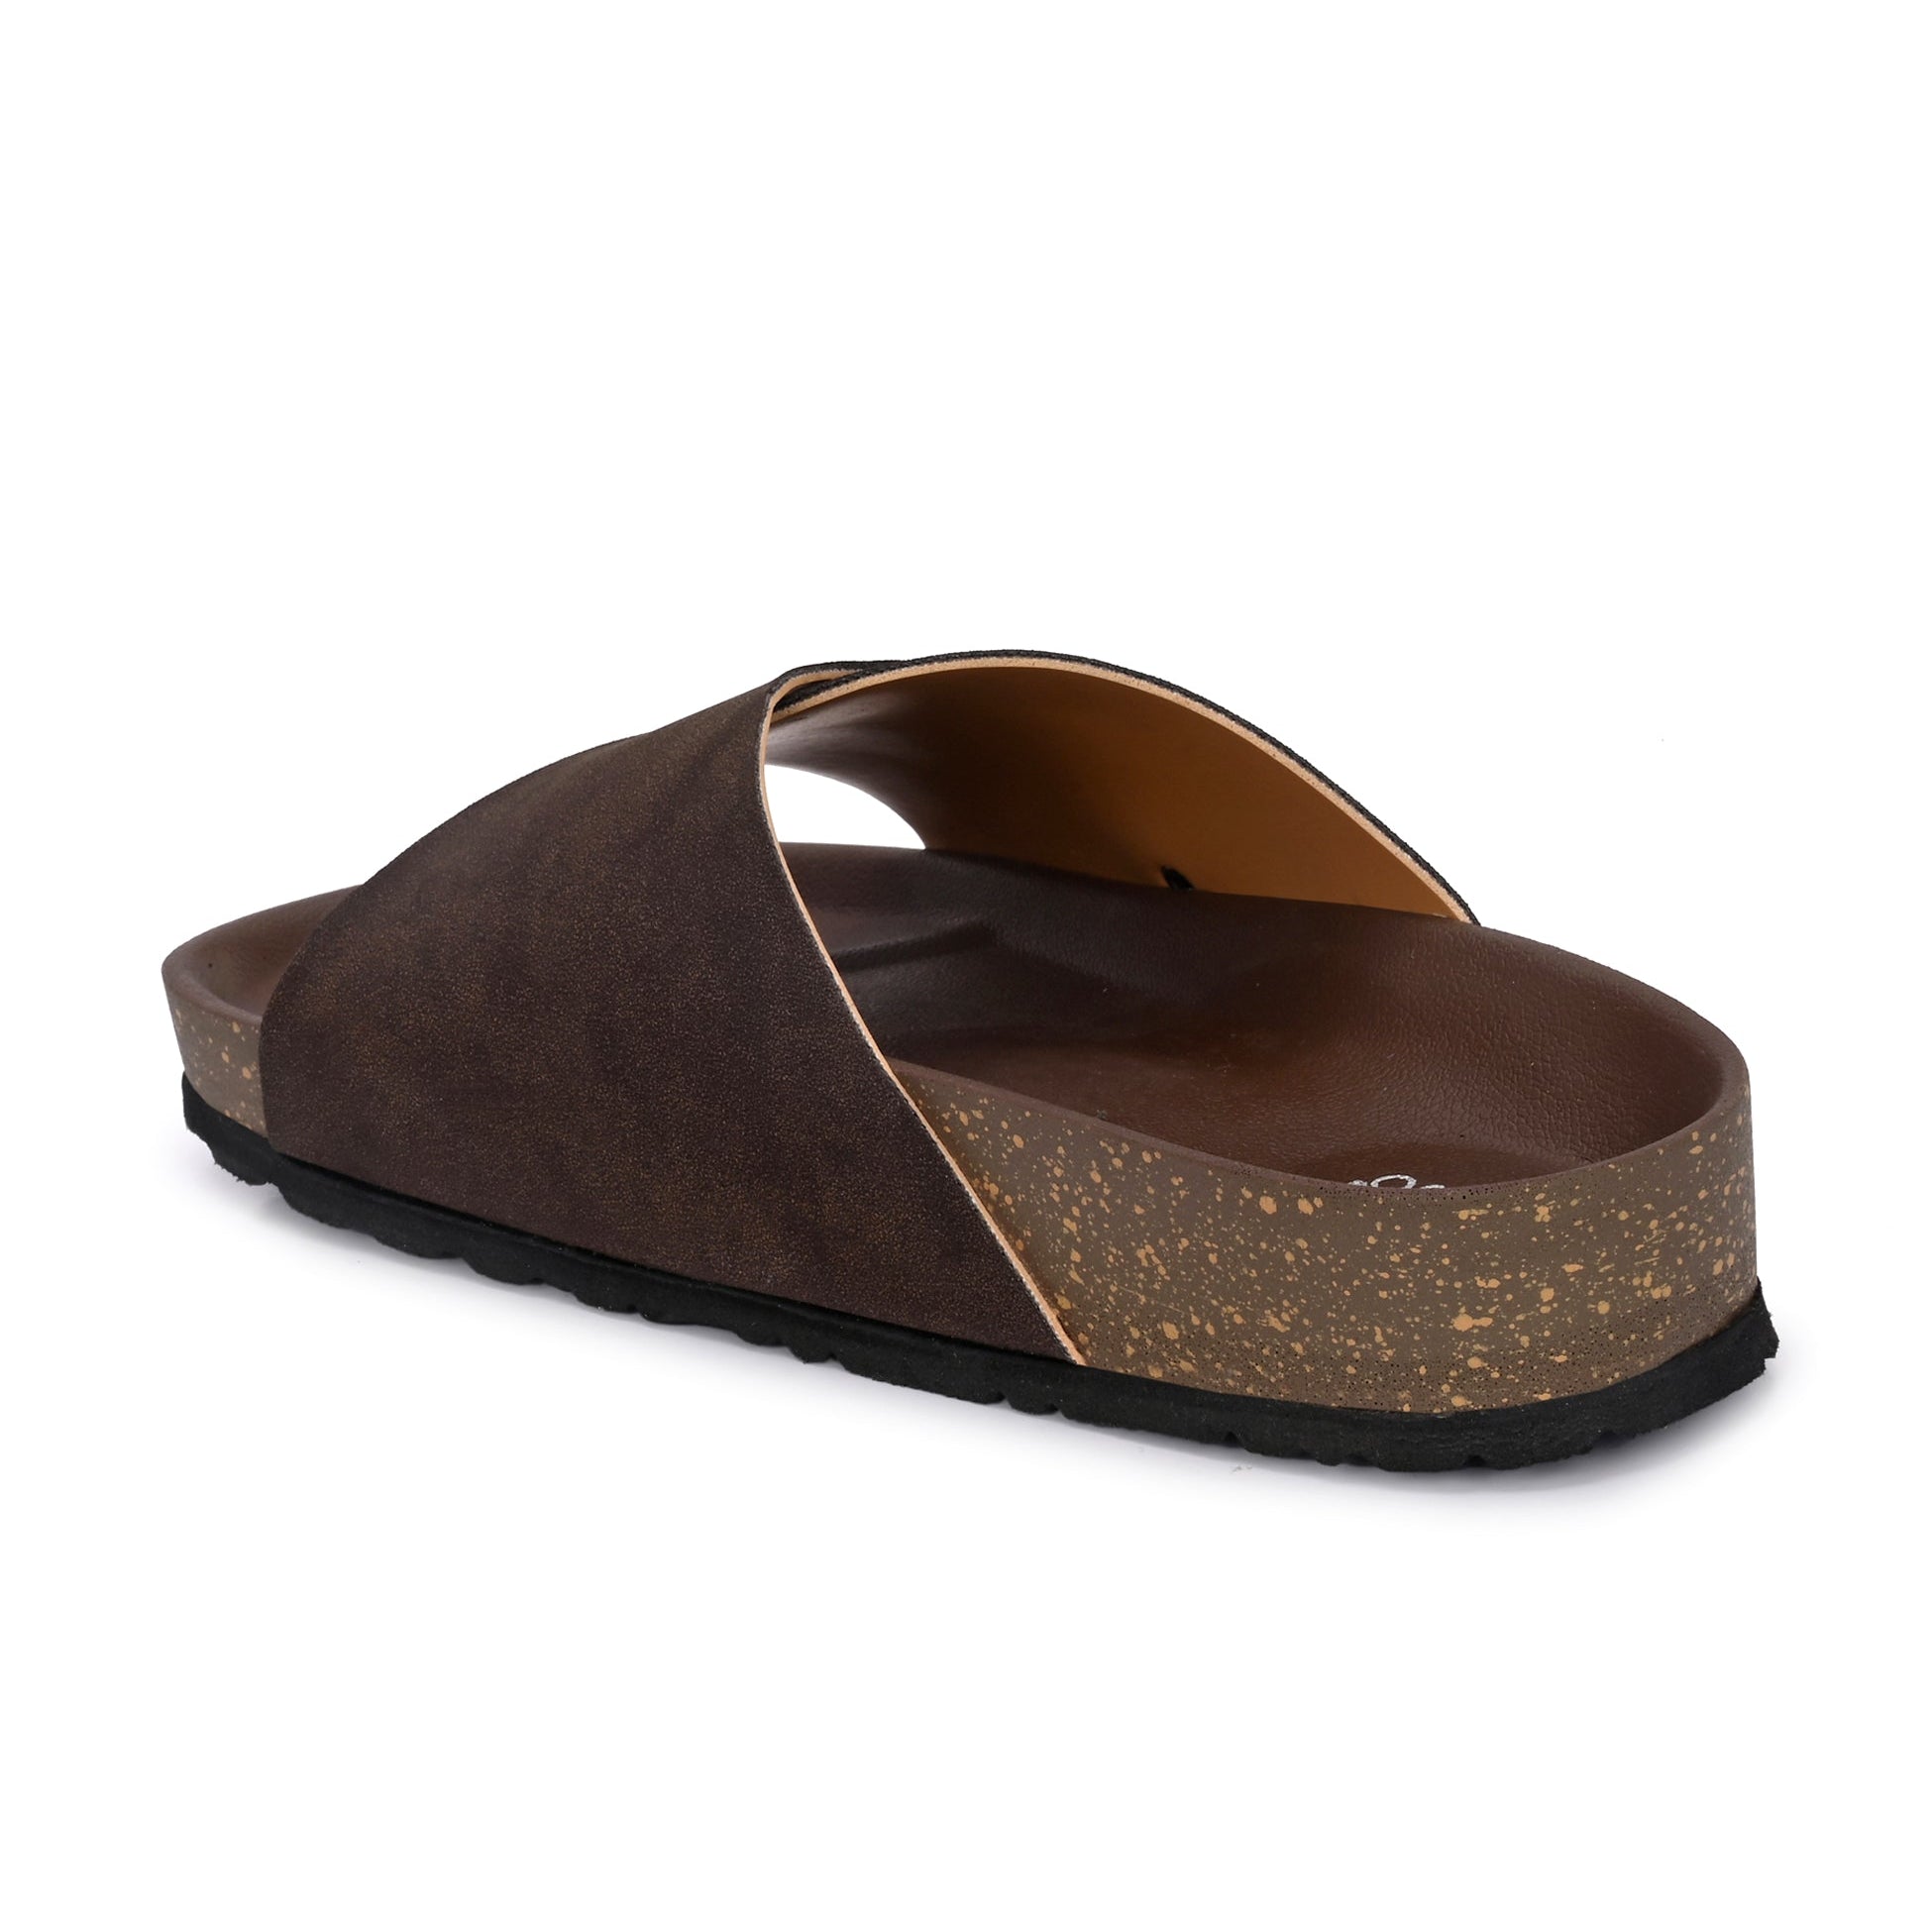 Brown Men's casual flat heel with buckle strap slip-on sandal